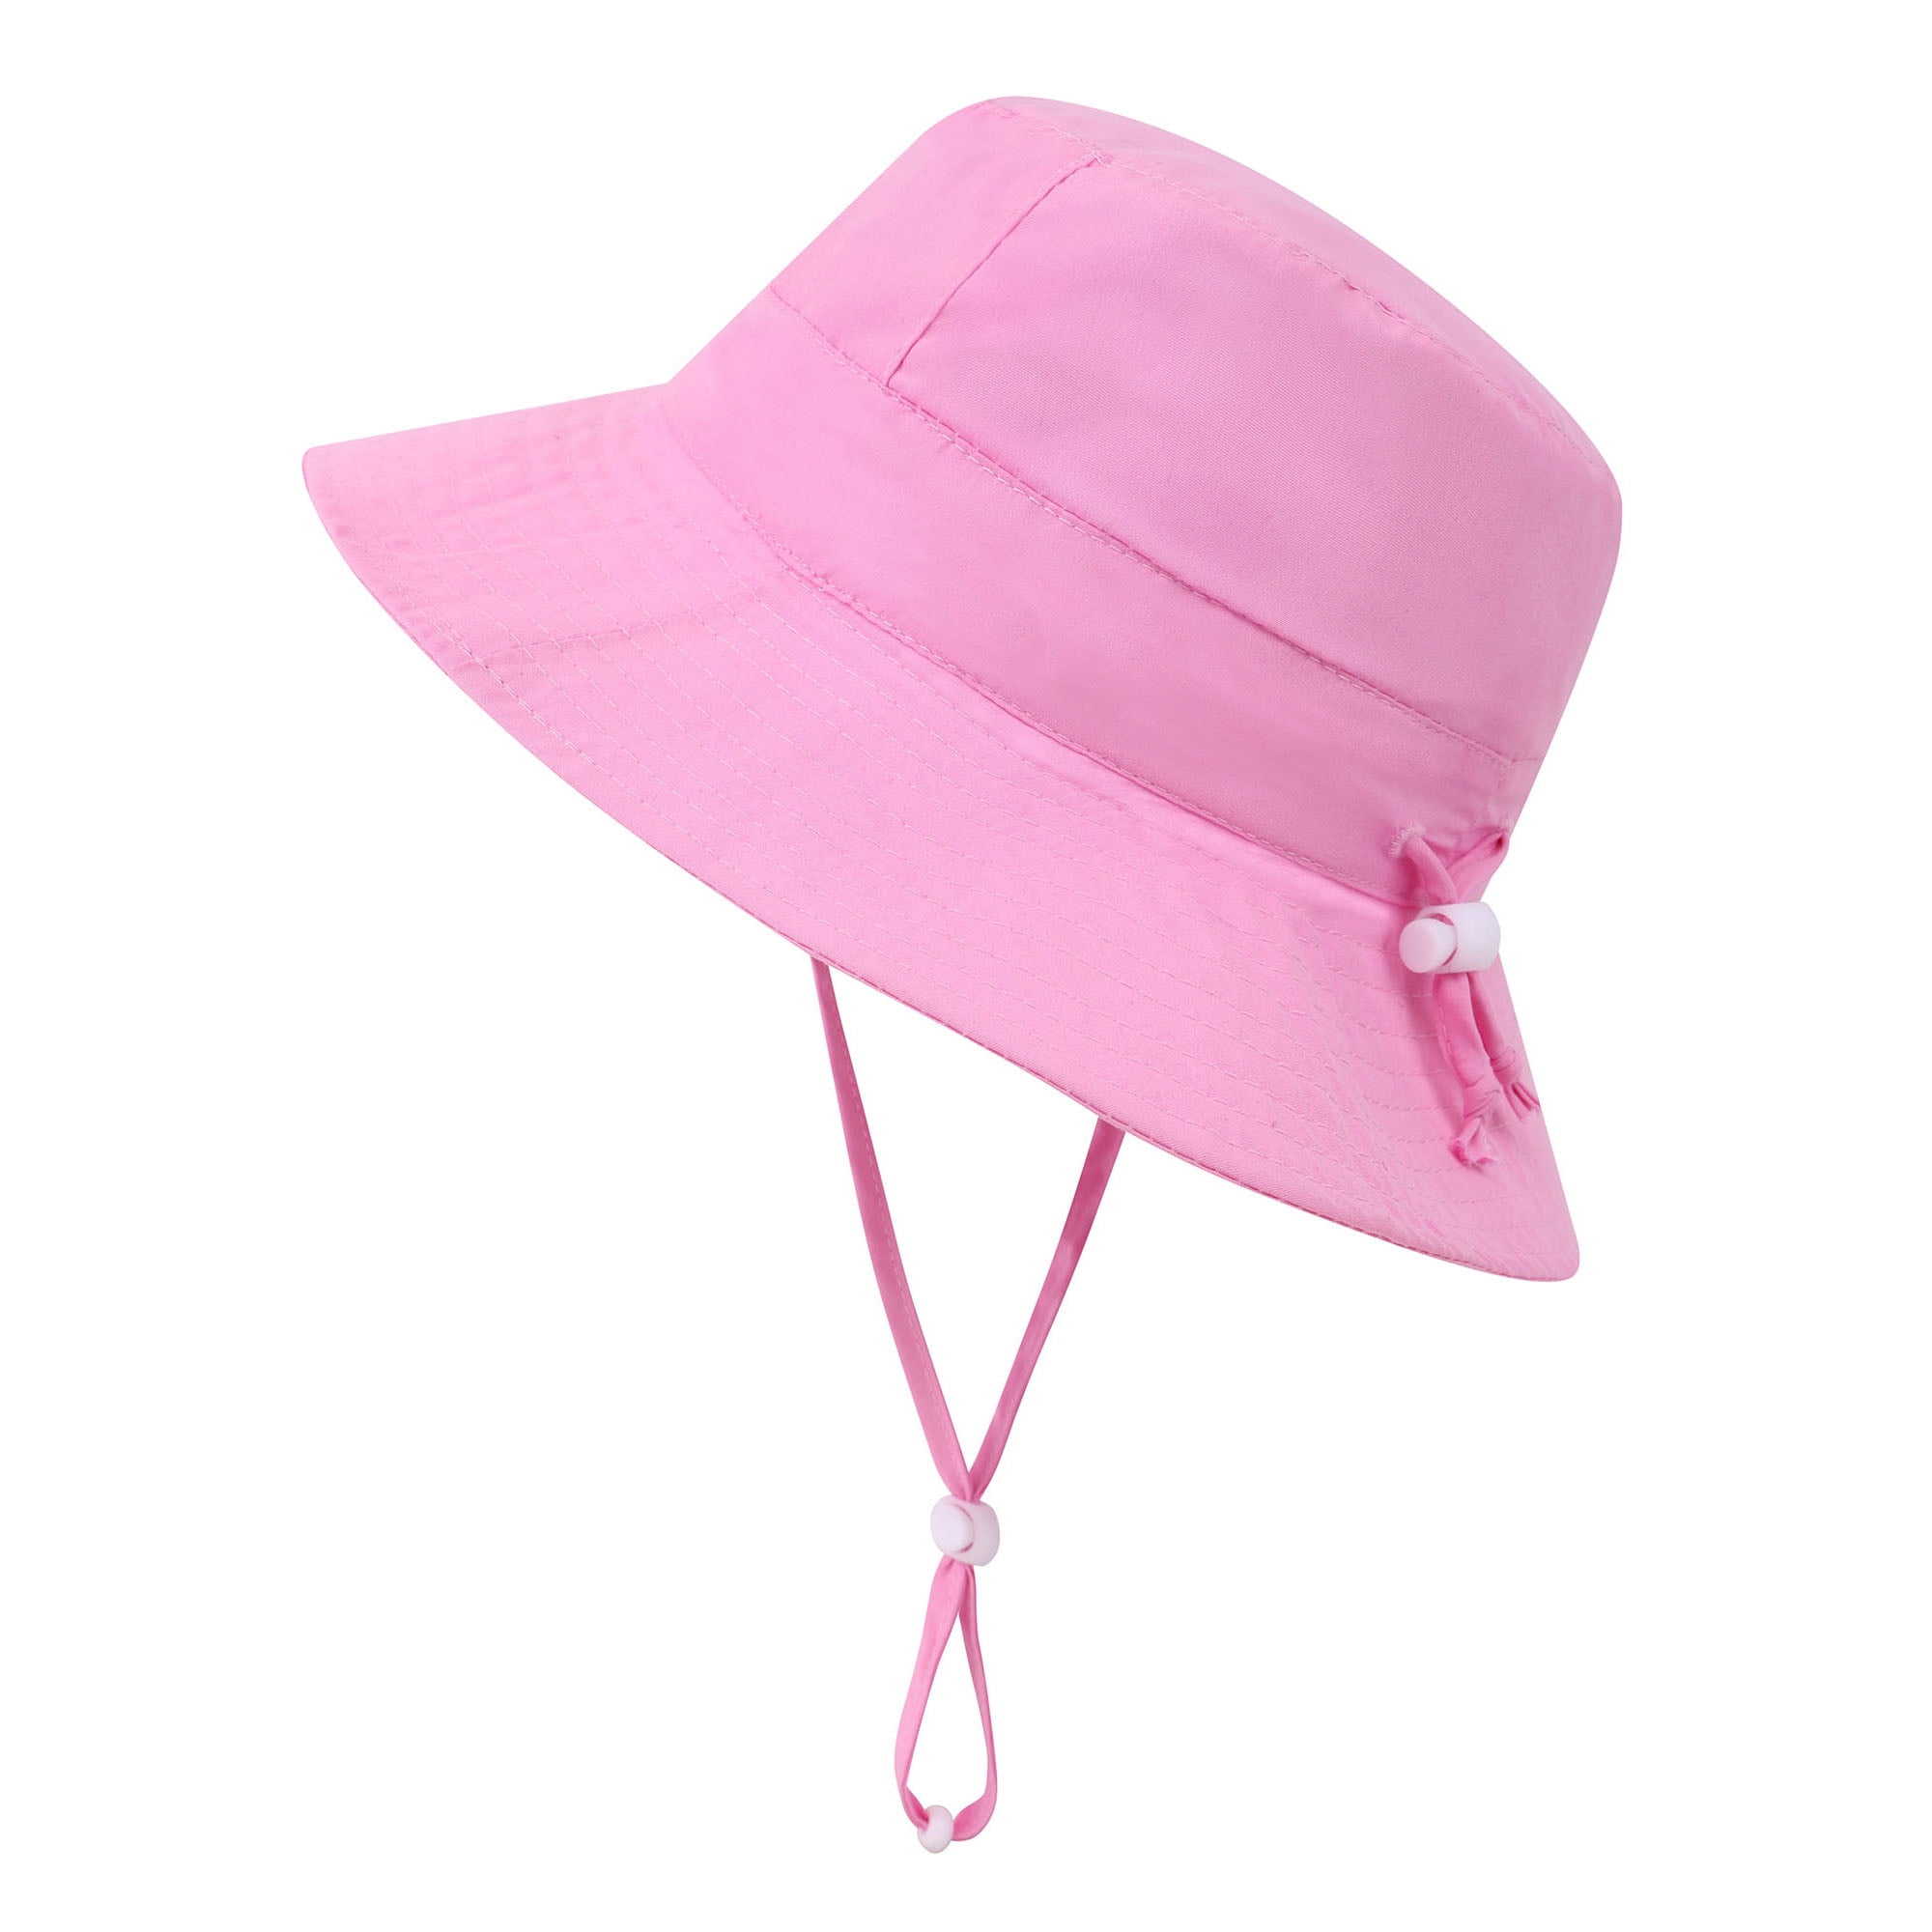 Accessoires Hoeden & petten Vissershoeden Pink Bucket Hat Women Cute Wide Brim Floppy Sun Protection Summer Frayed Sun Hats Canvas 100% Cotton Sunhat Roll n go Best Gift for Her 